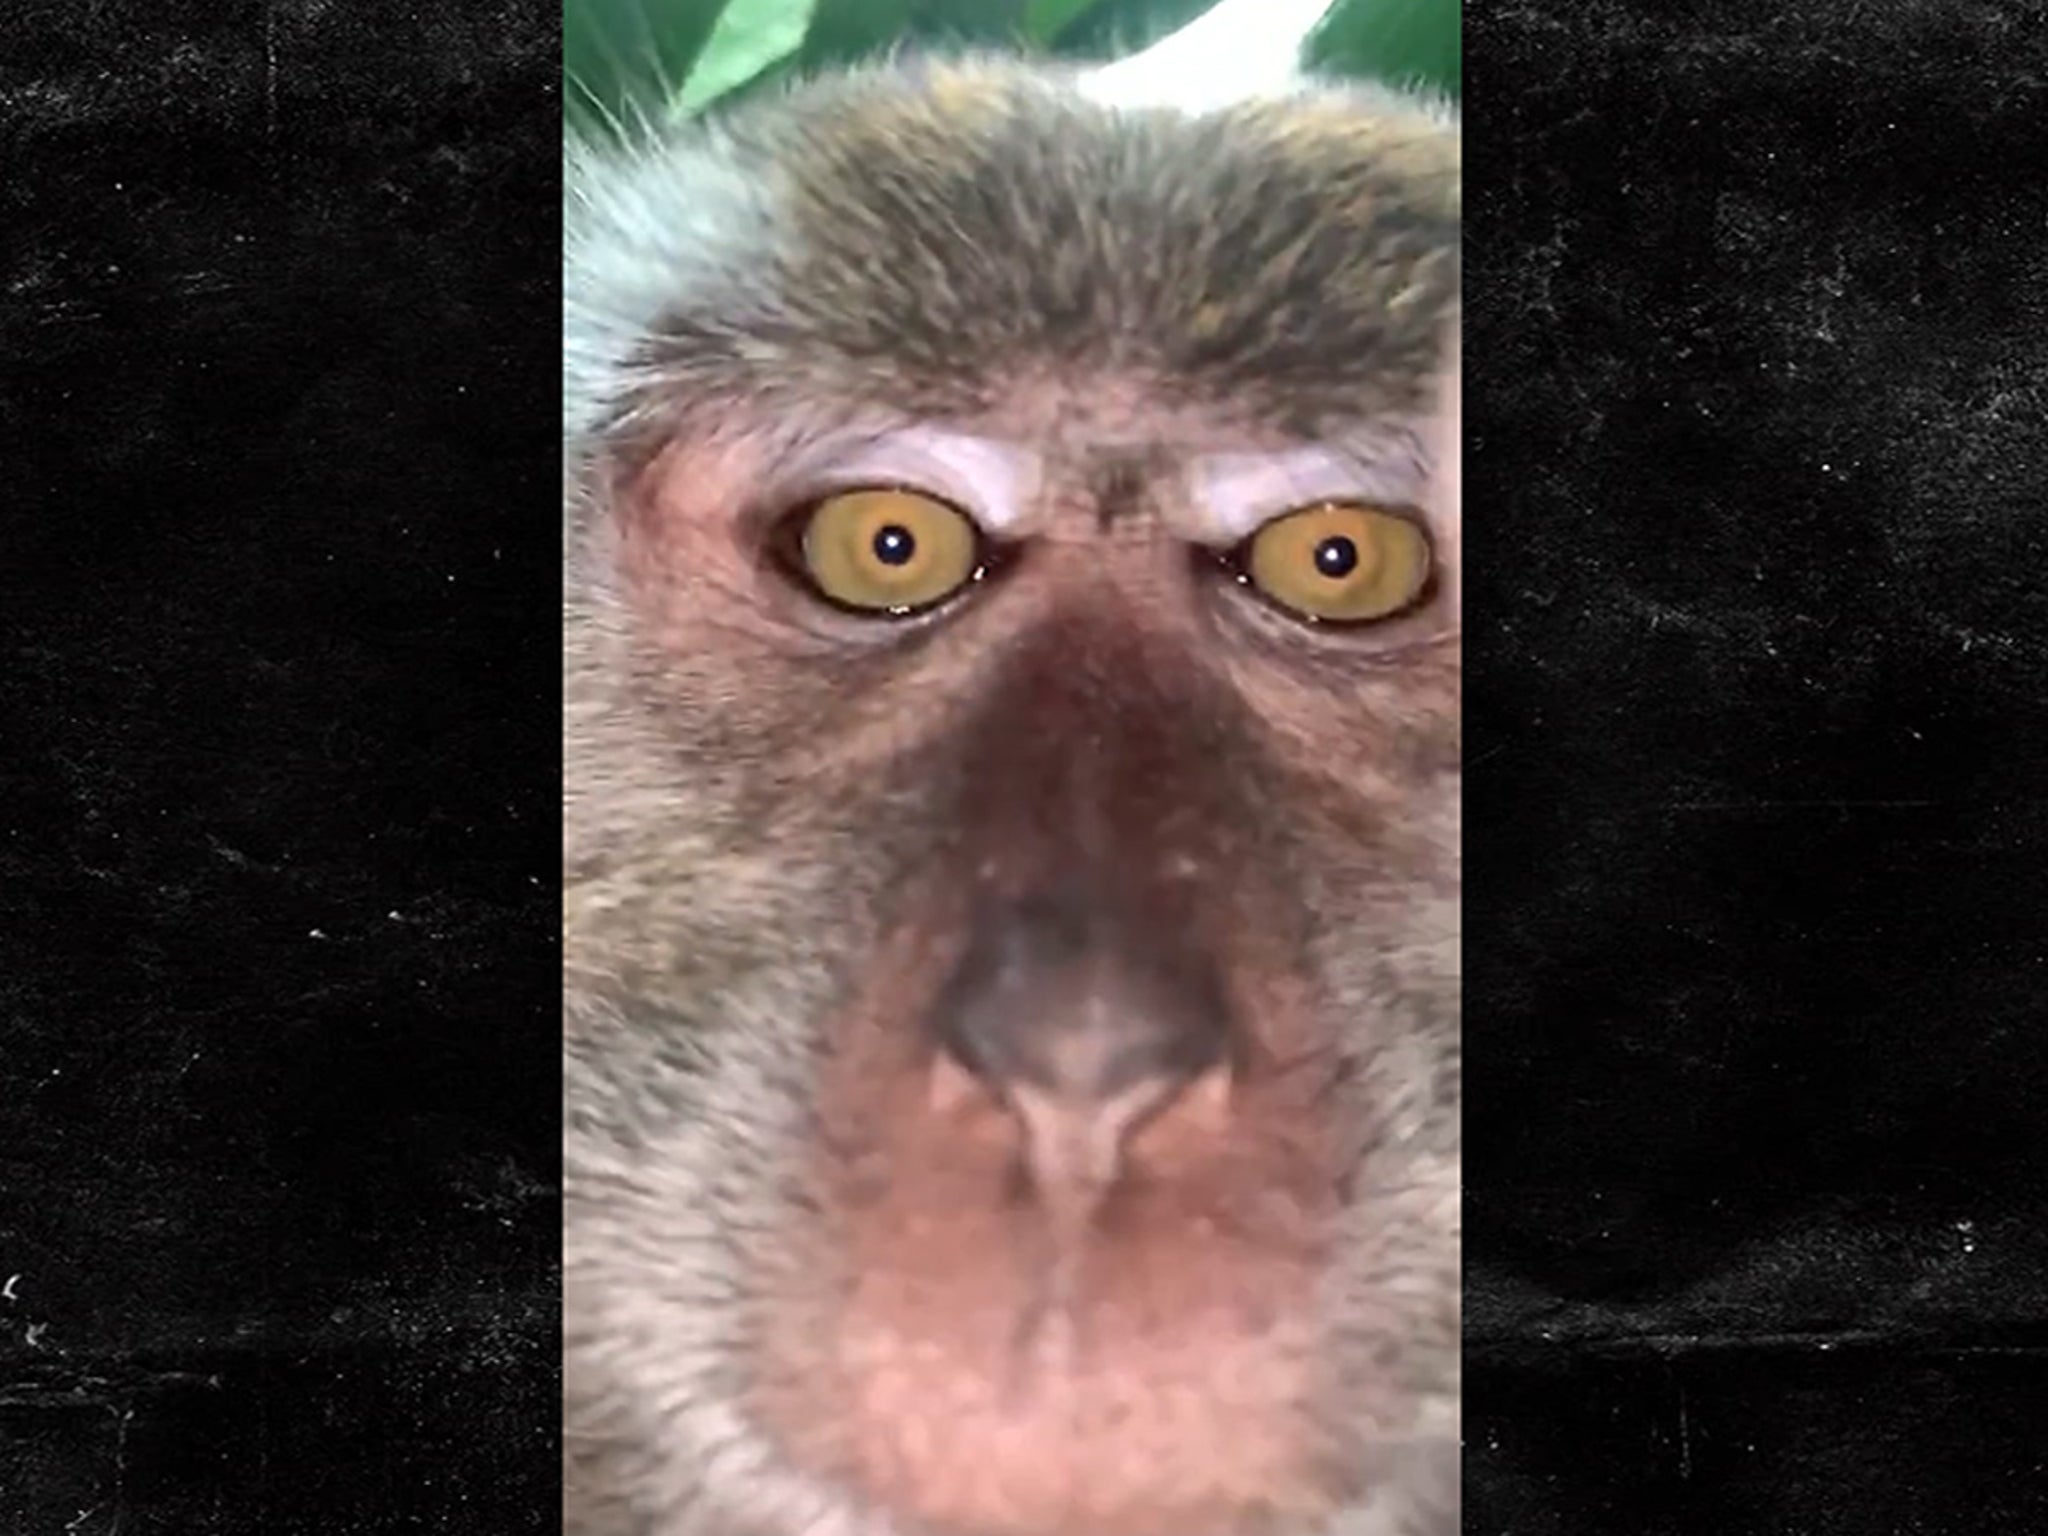 monkey looking at security camera meme｜TikTok Search